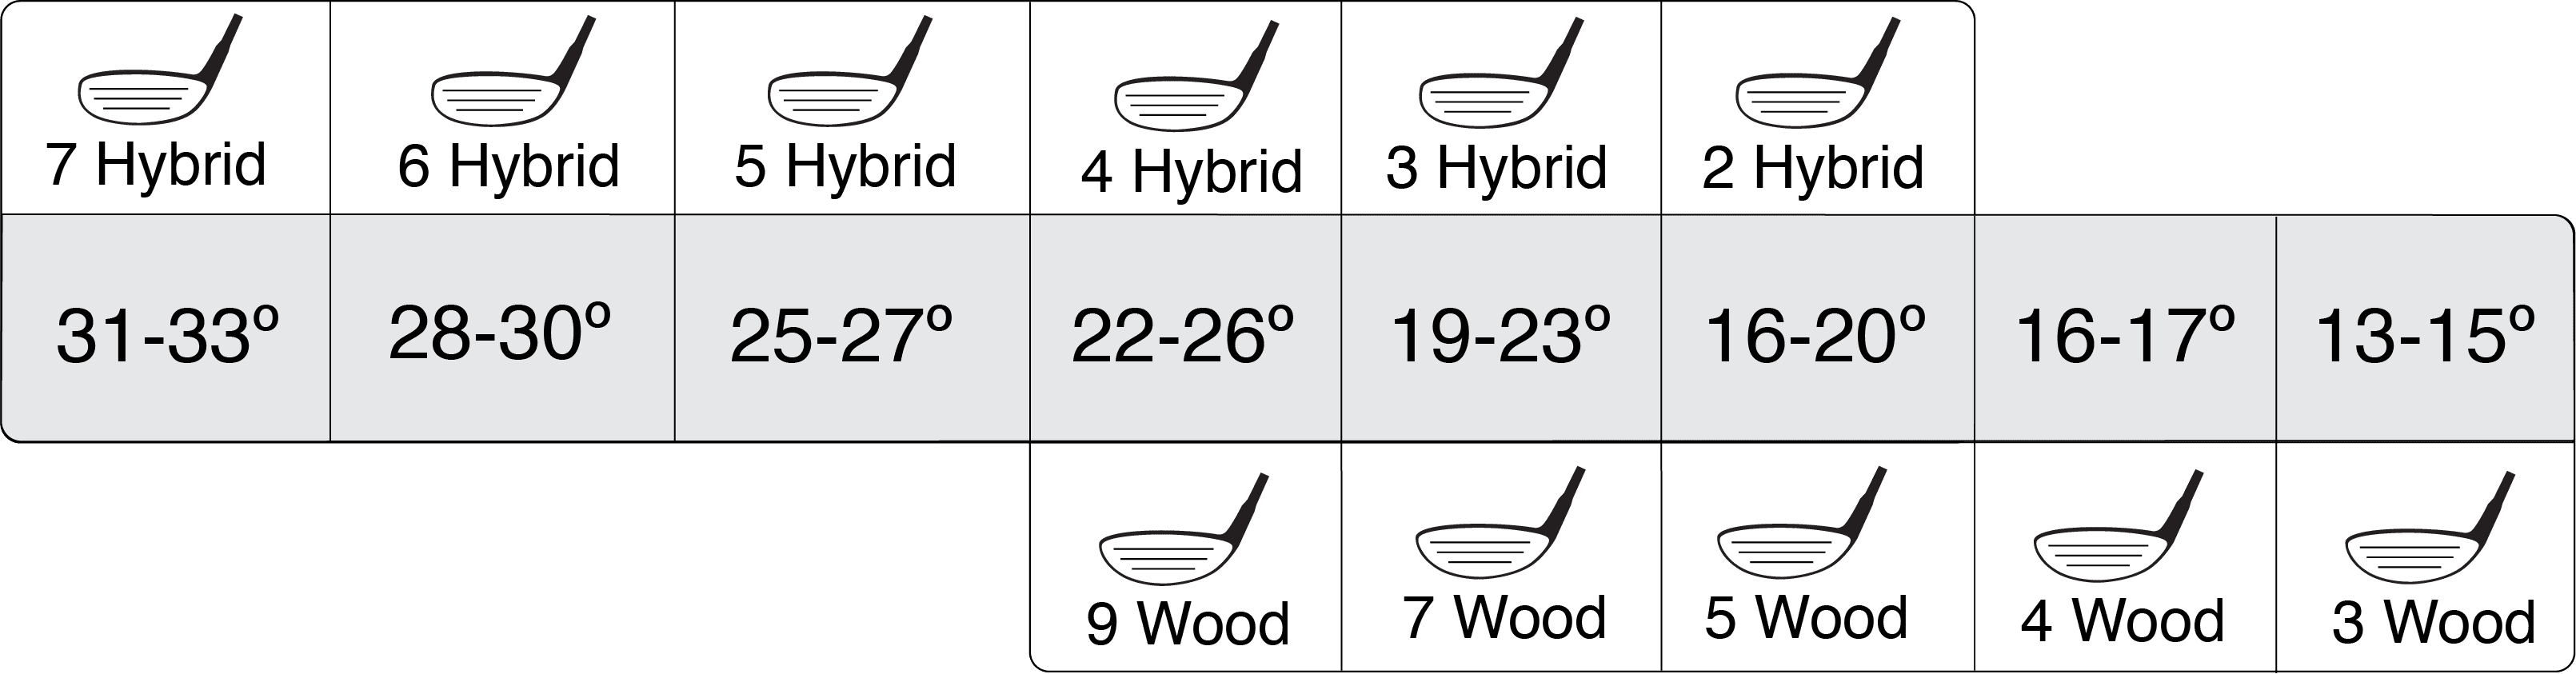 Hybrid Golf Club Shaft Length Chart